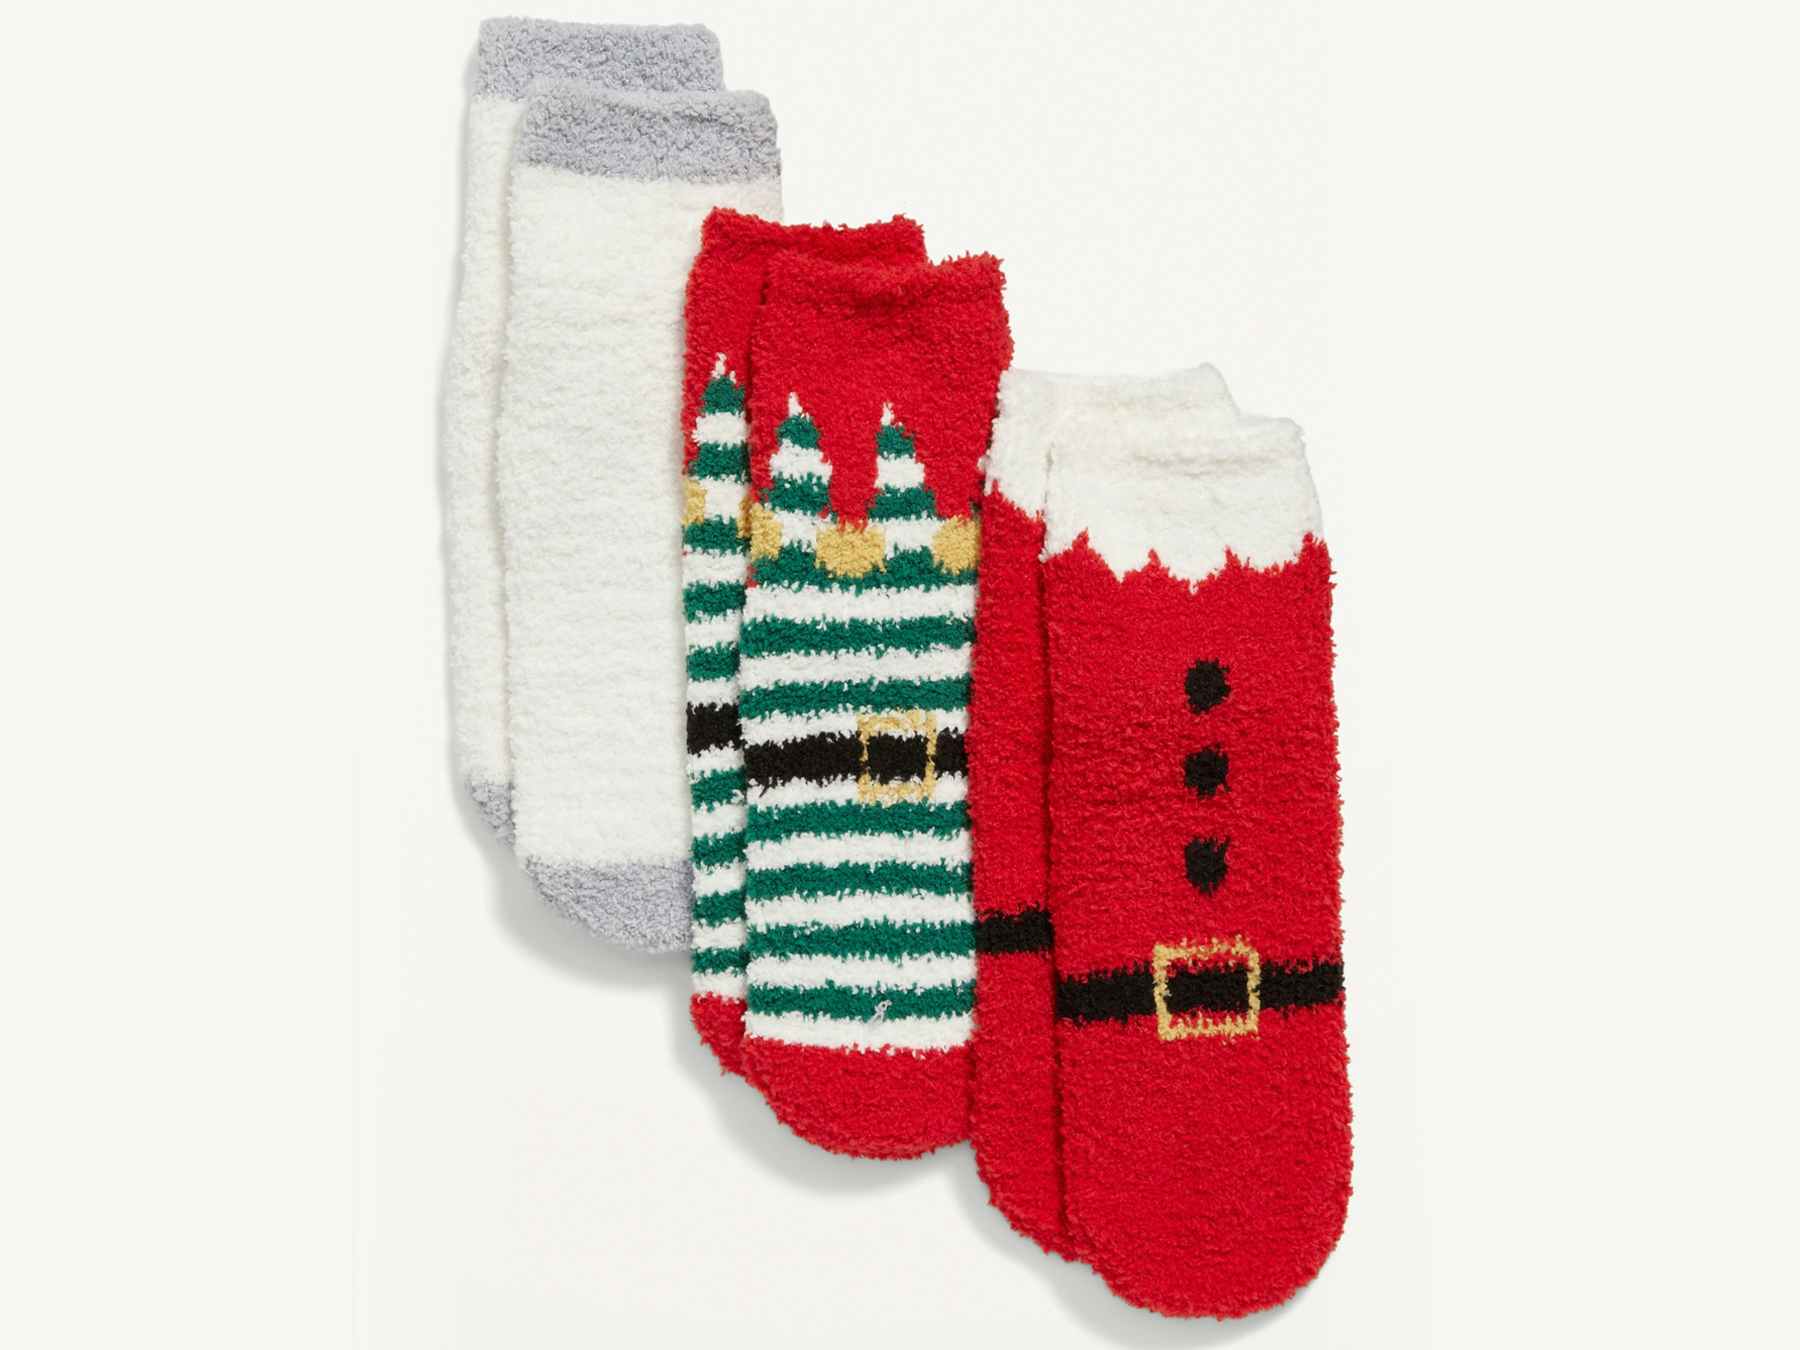 Cozy Christmas socks from Gap